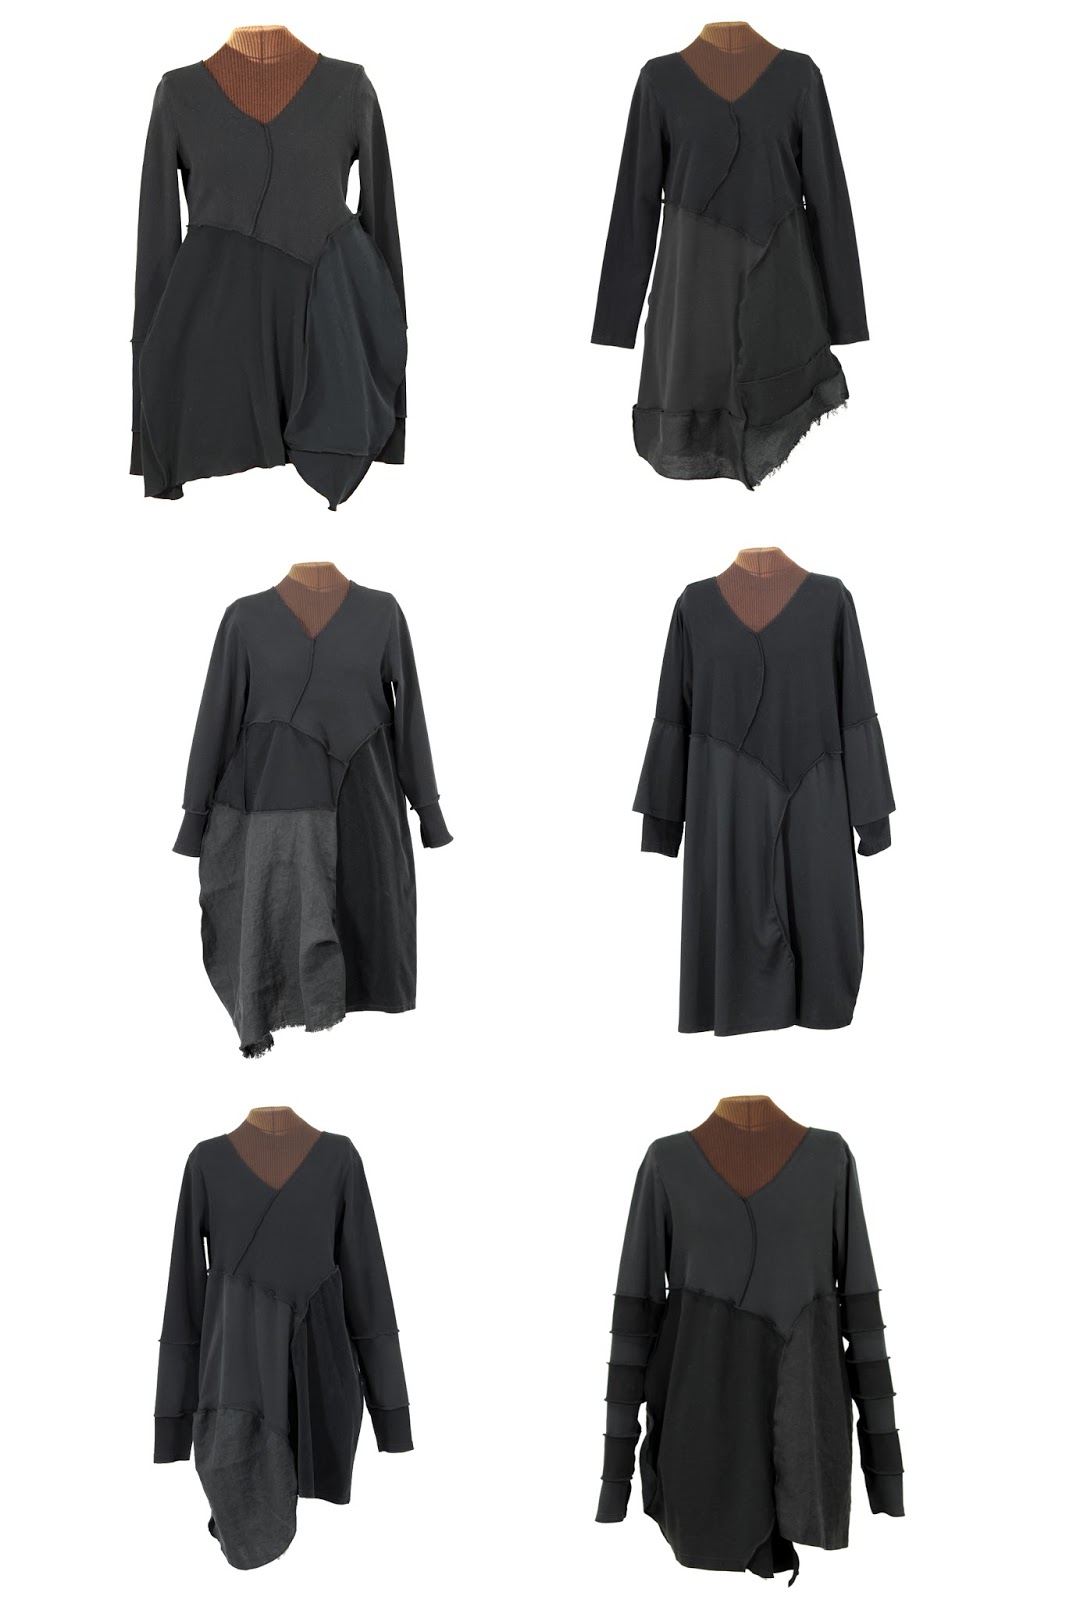 secret lentil clothing: black dresses